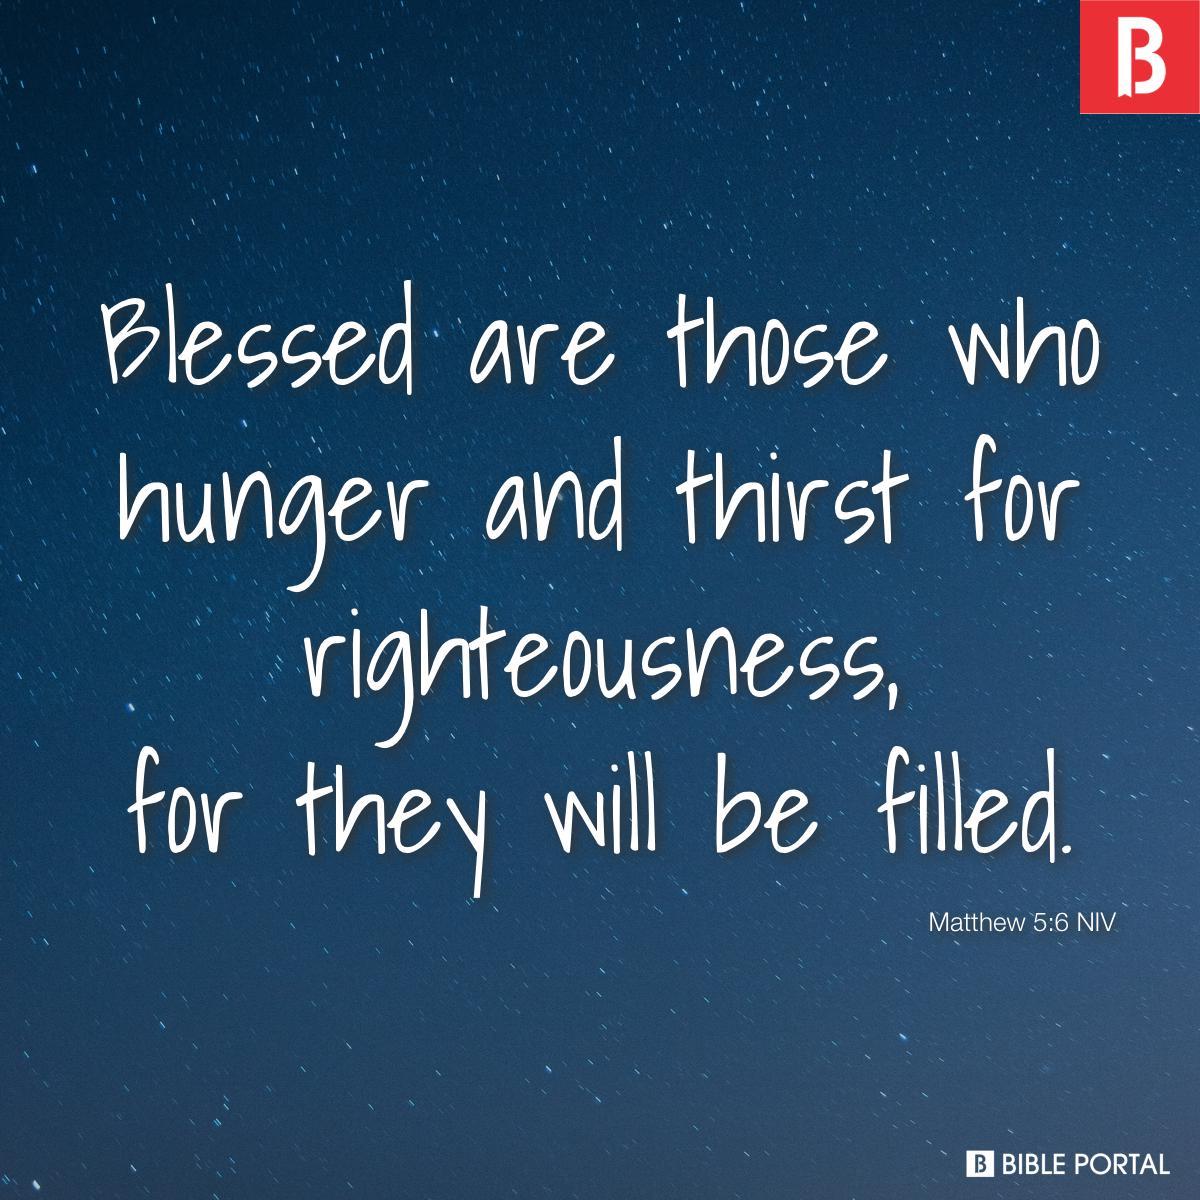 Bible verse of the day - January 22, 2022 - Matthew 5:6